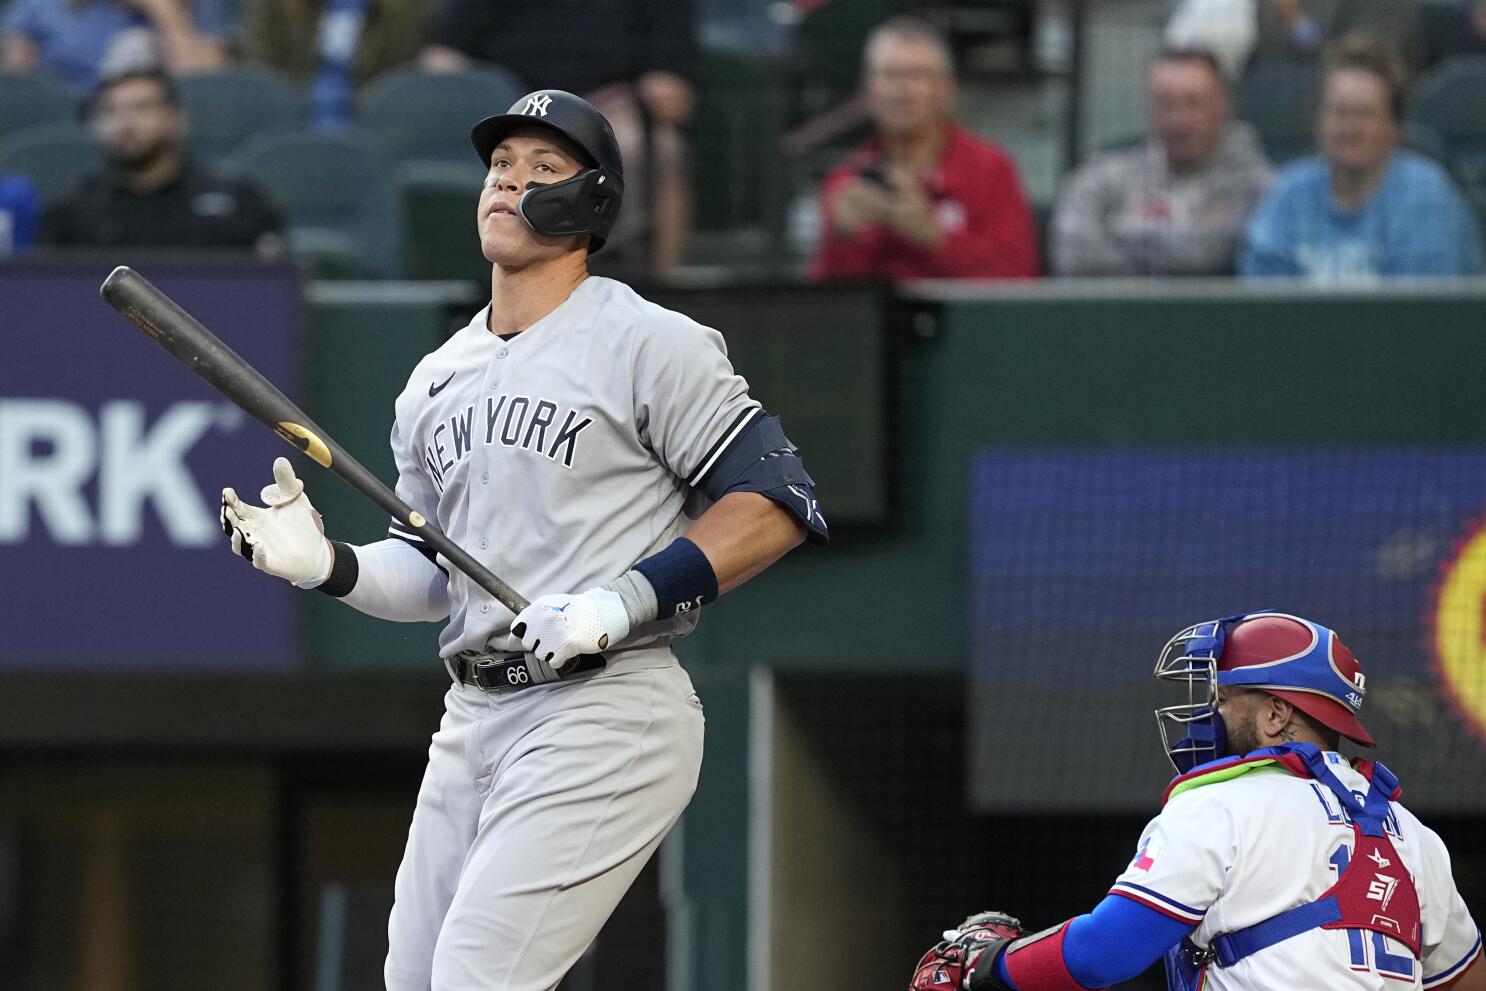 Yankees star Aaron Judge hits 62nd home run to break Roger Maris